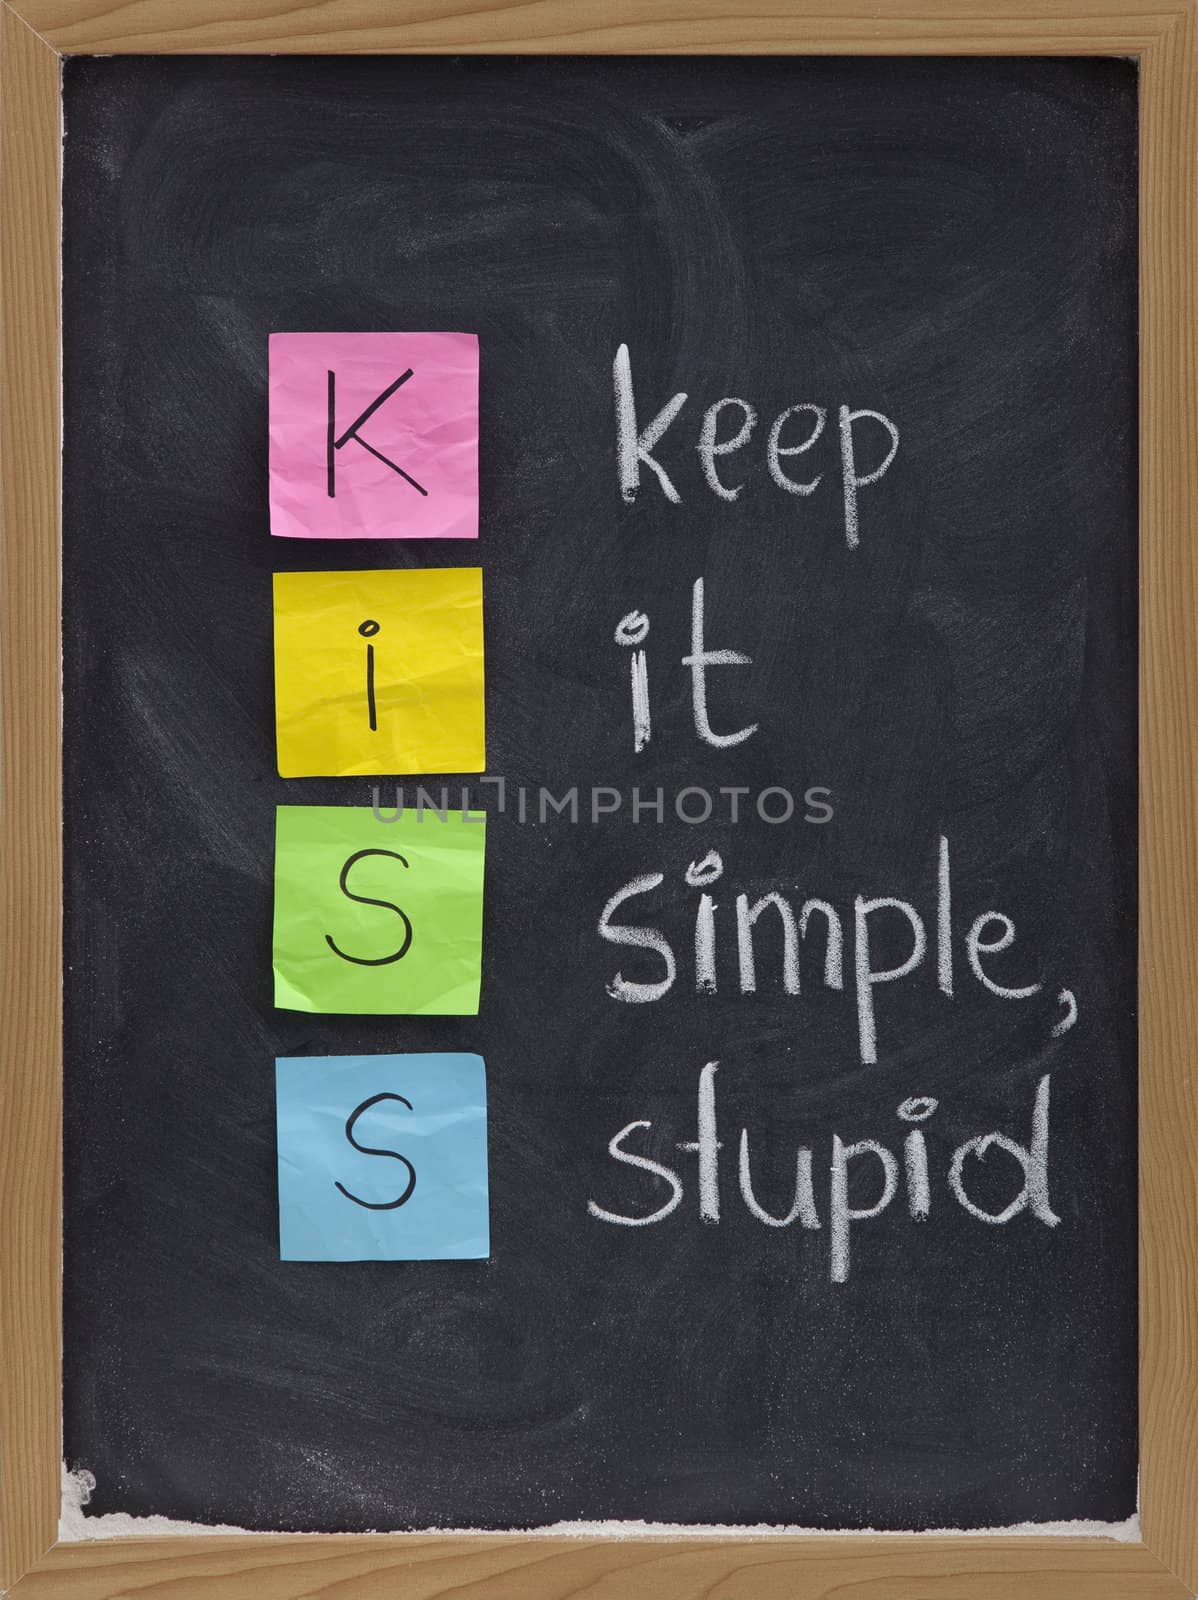 keep it simple, stupid - KISS principle by PixelsAway